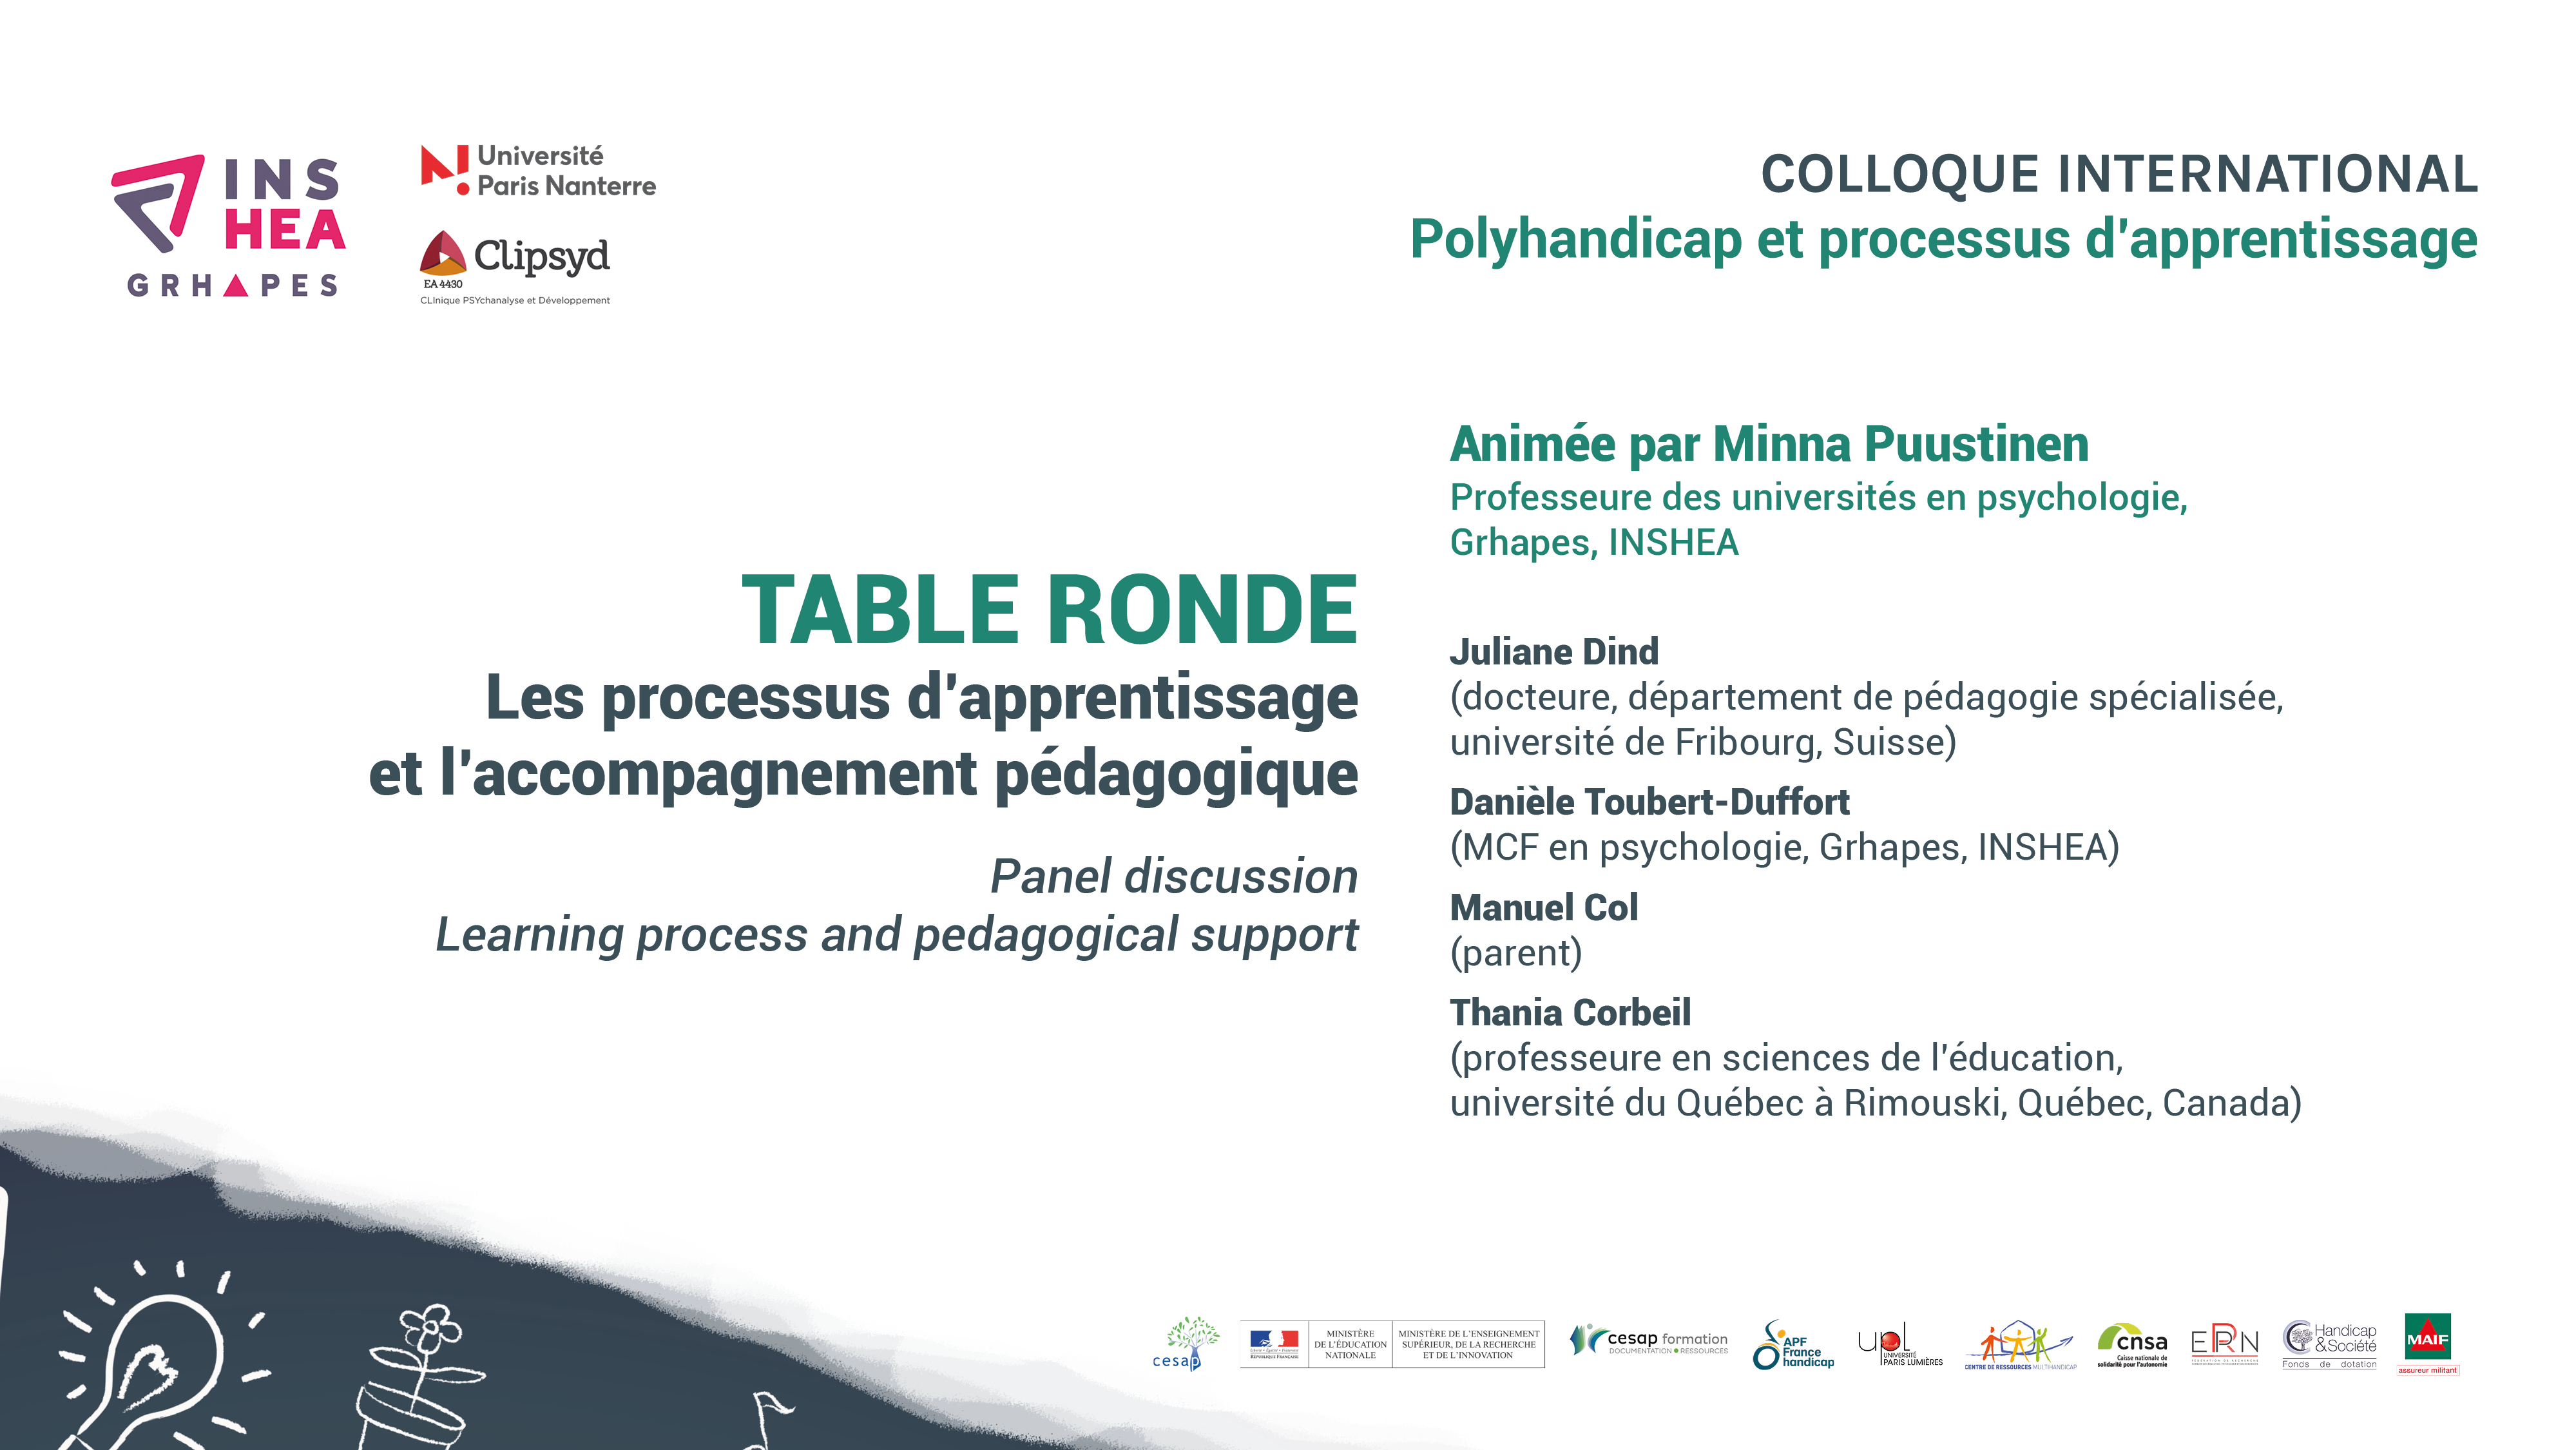 Colloque POLYHANDICAP TABLE RONDE : Danièle Toubert-Duffort - Manuel Col - Thania Corbeil